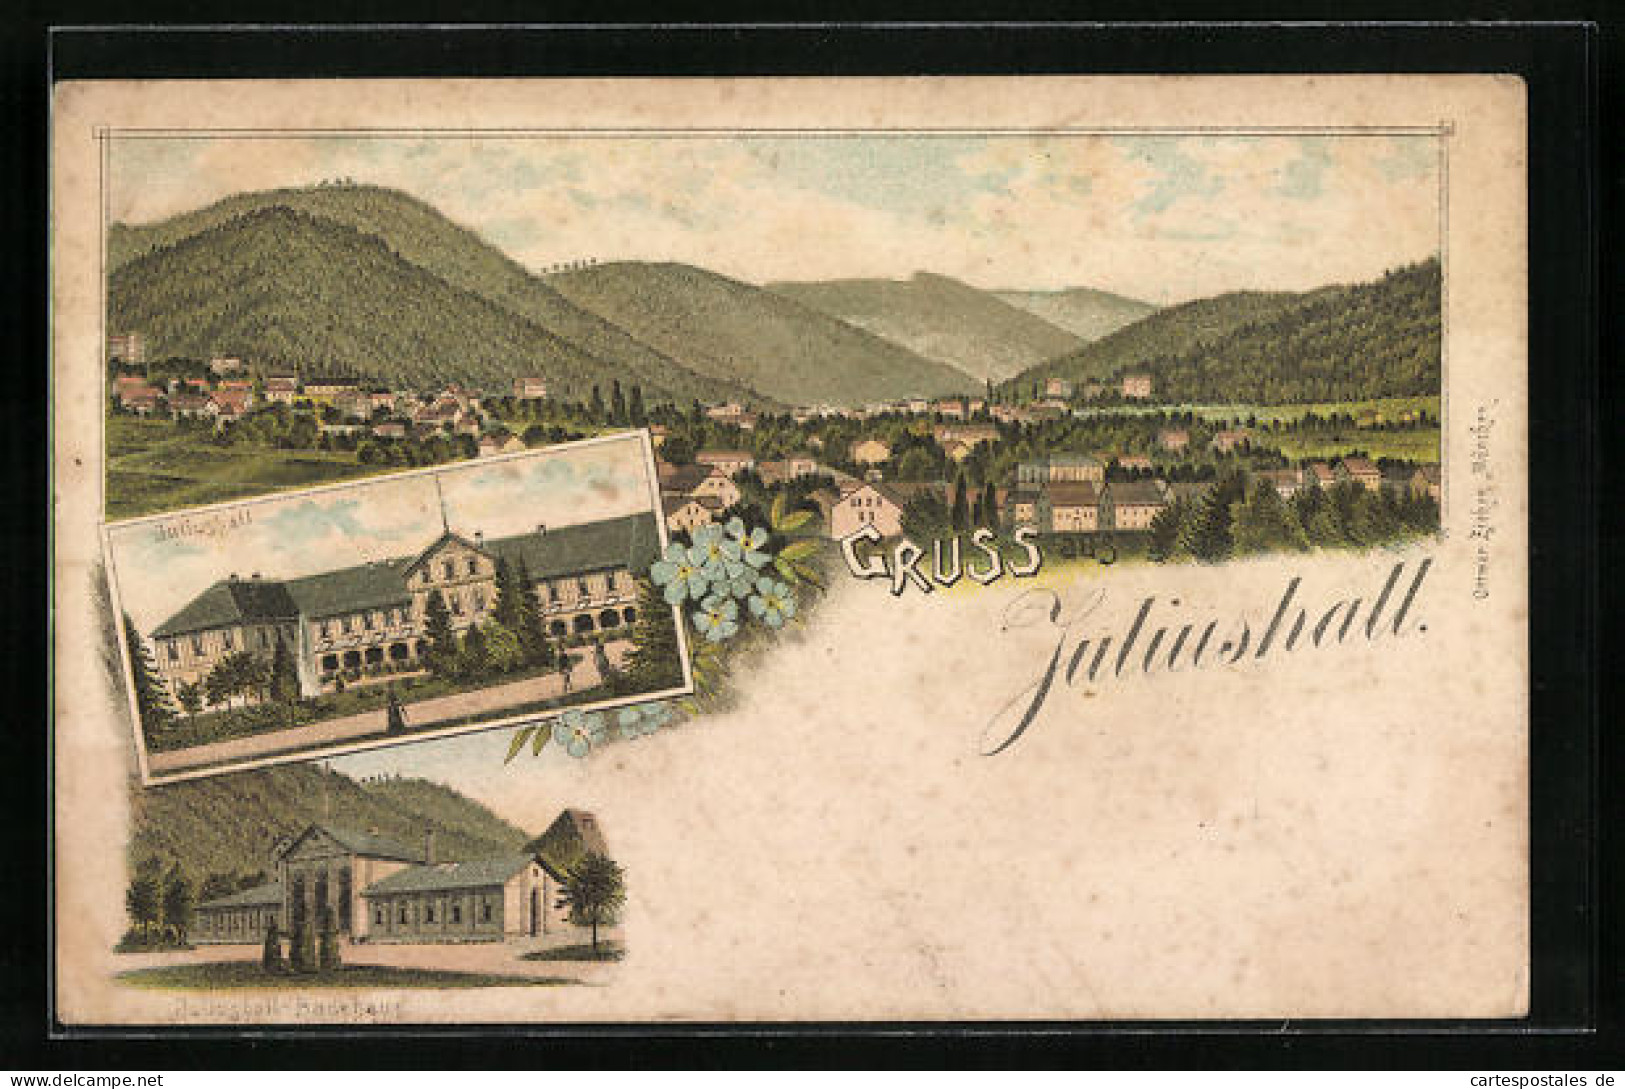 Lithographie Bad Harzburg, Kurhotel Juliushall Mit Badehaus  - Bad Harzburg